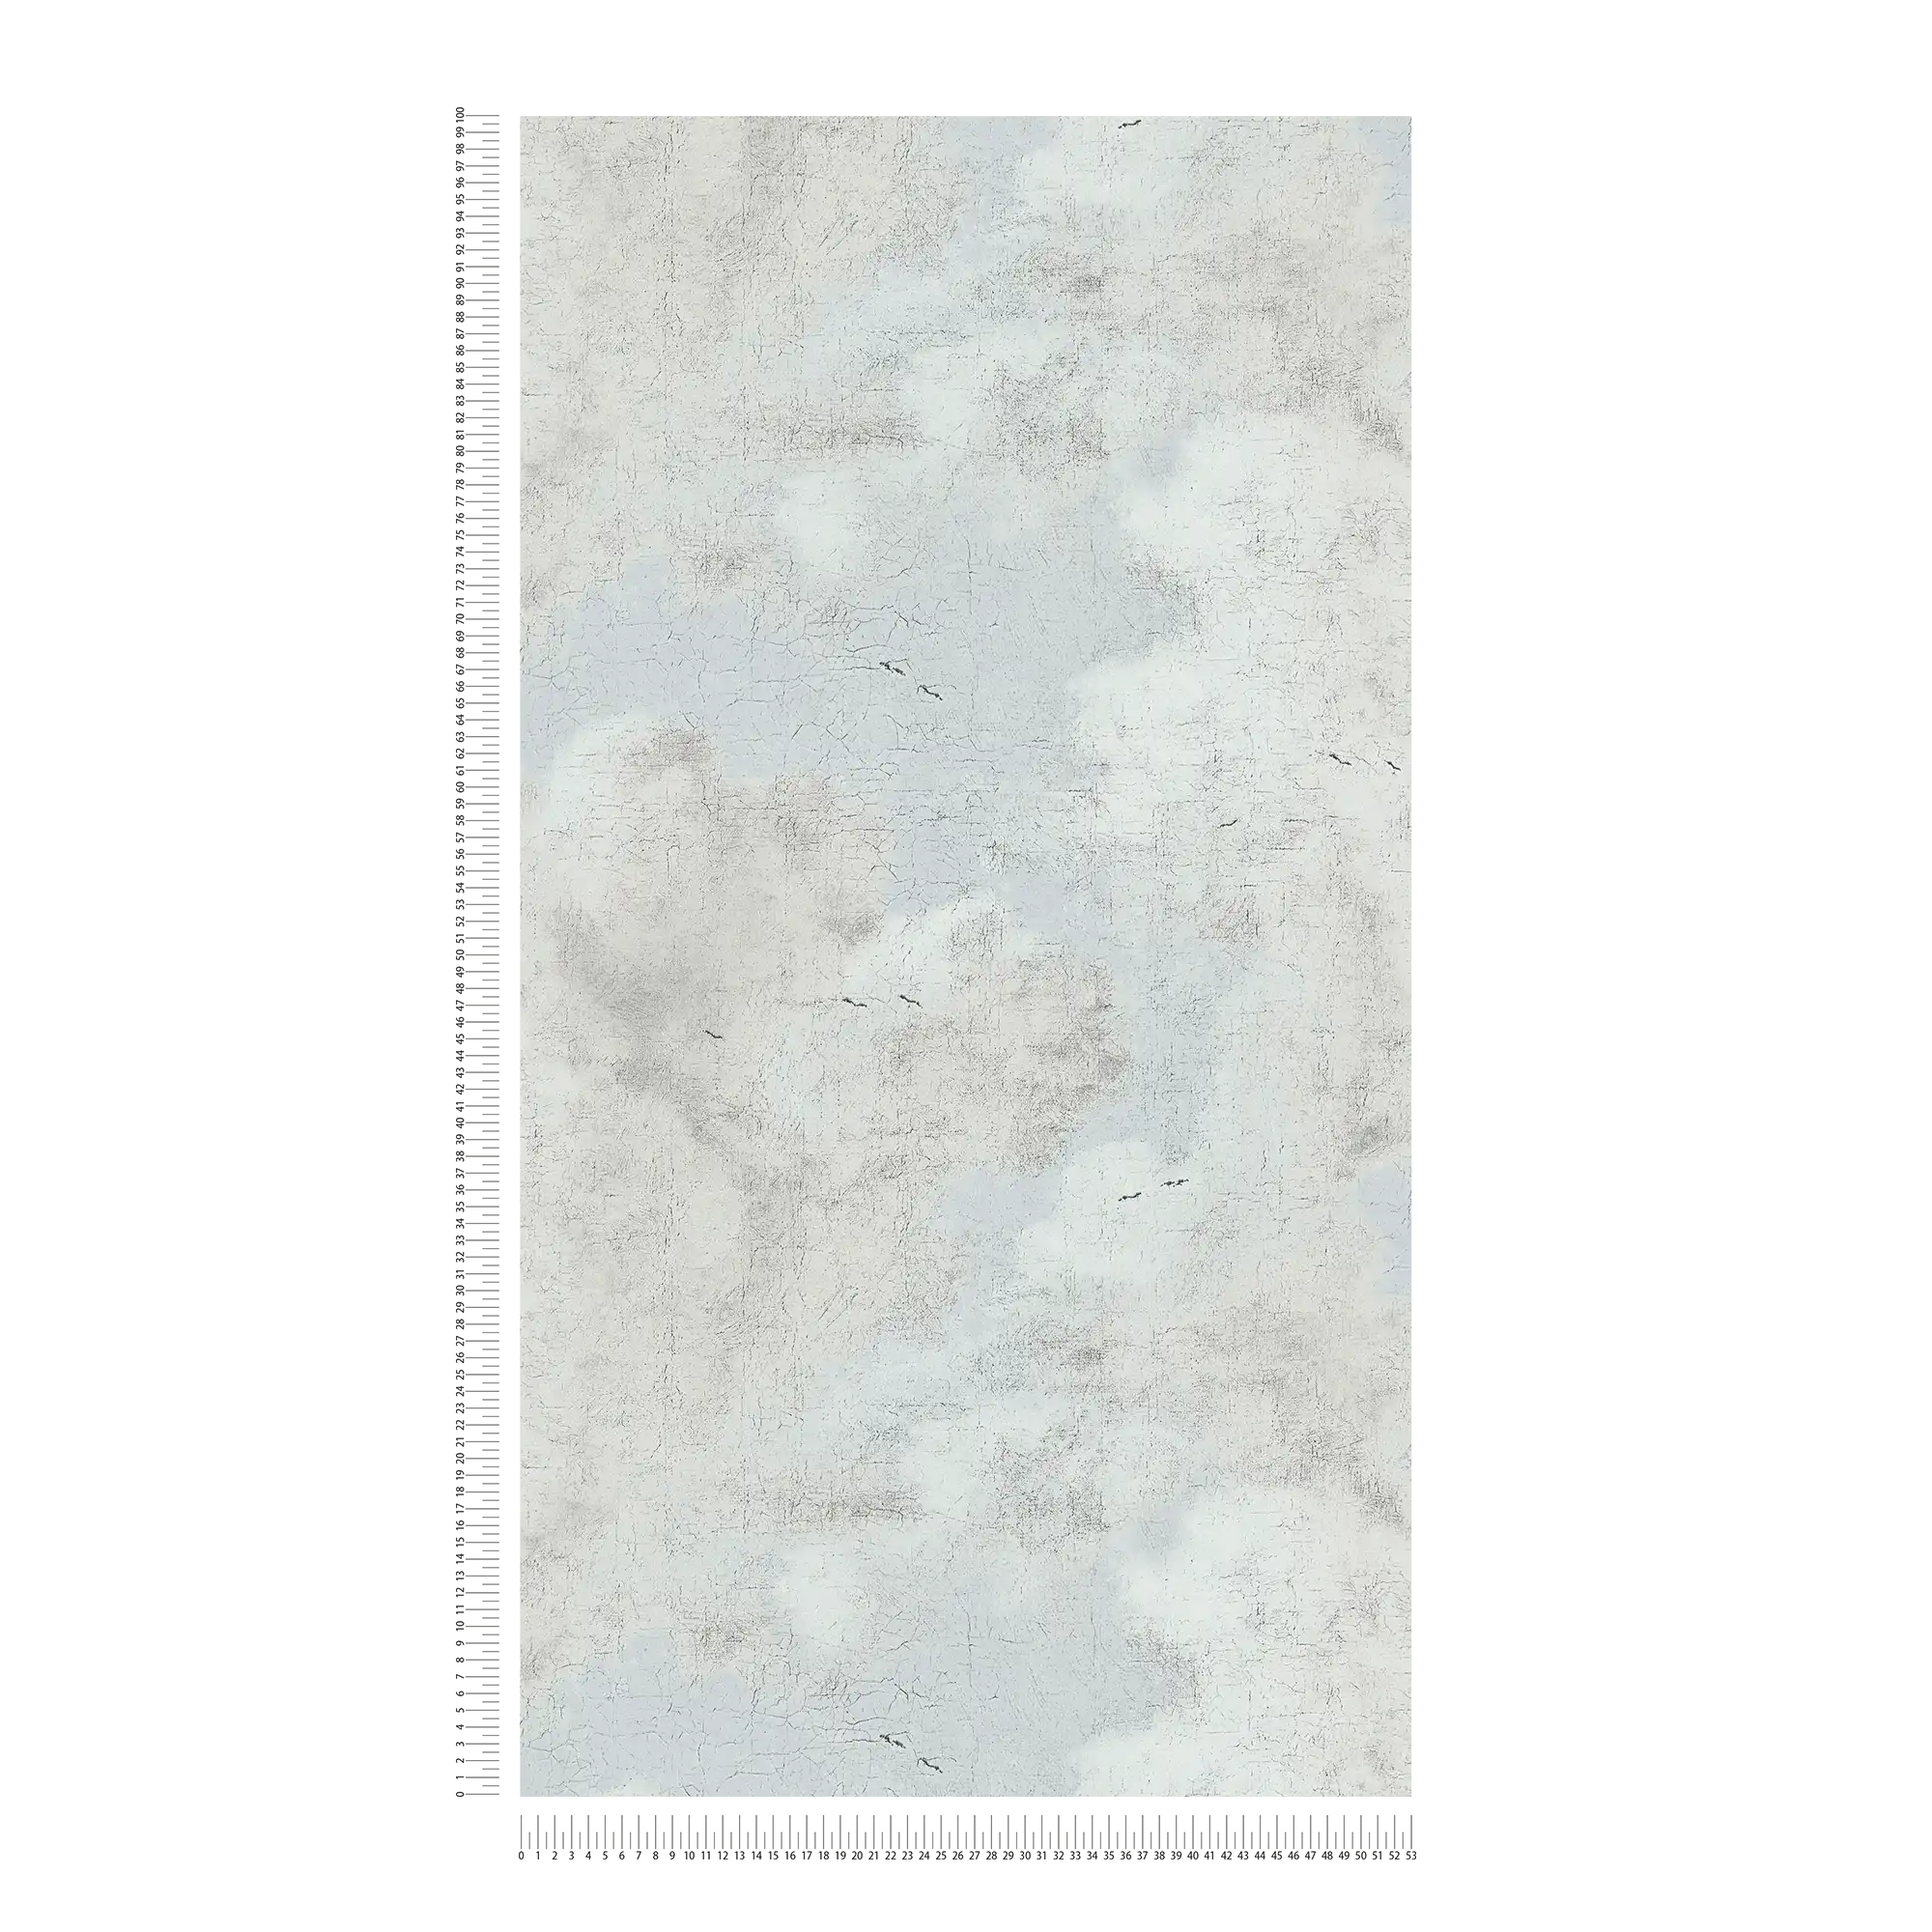             Non-woven wallpaper clouds sky in art style - cream, white, blue
        